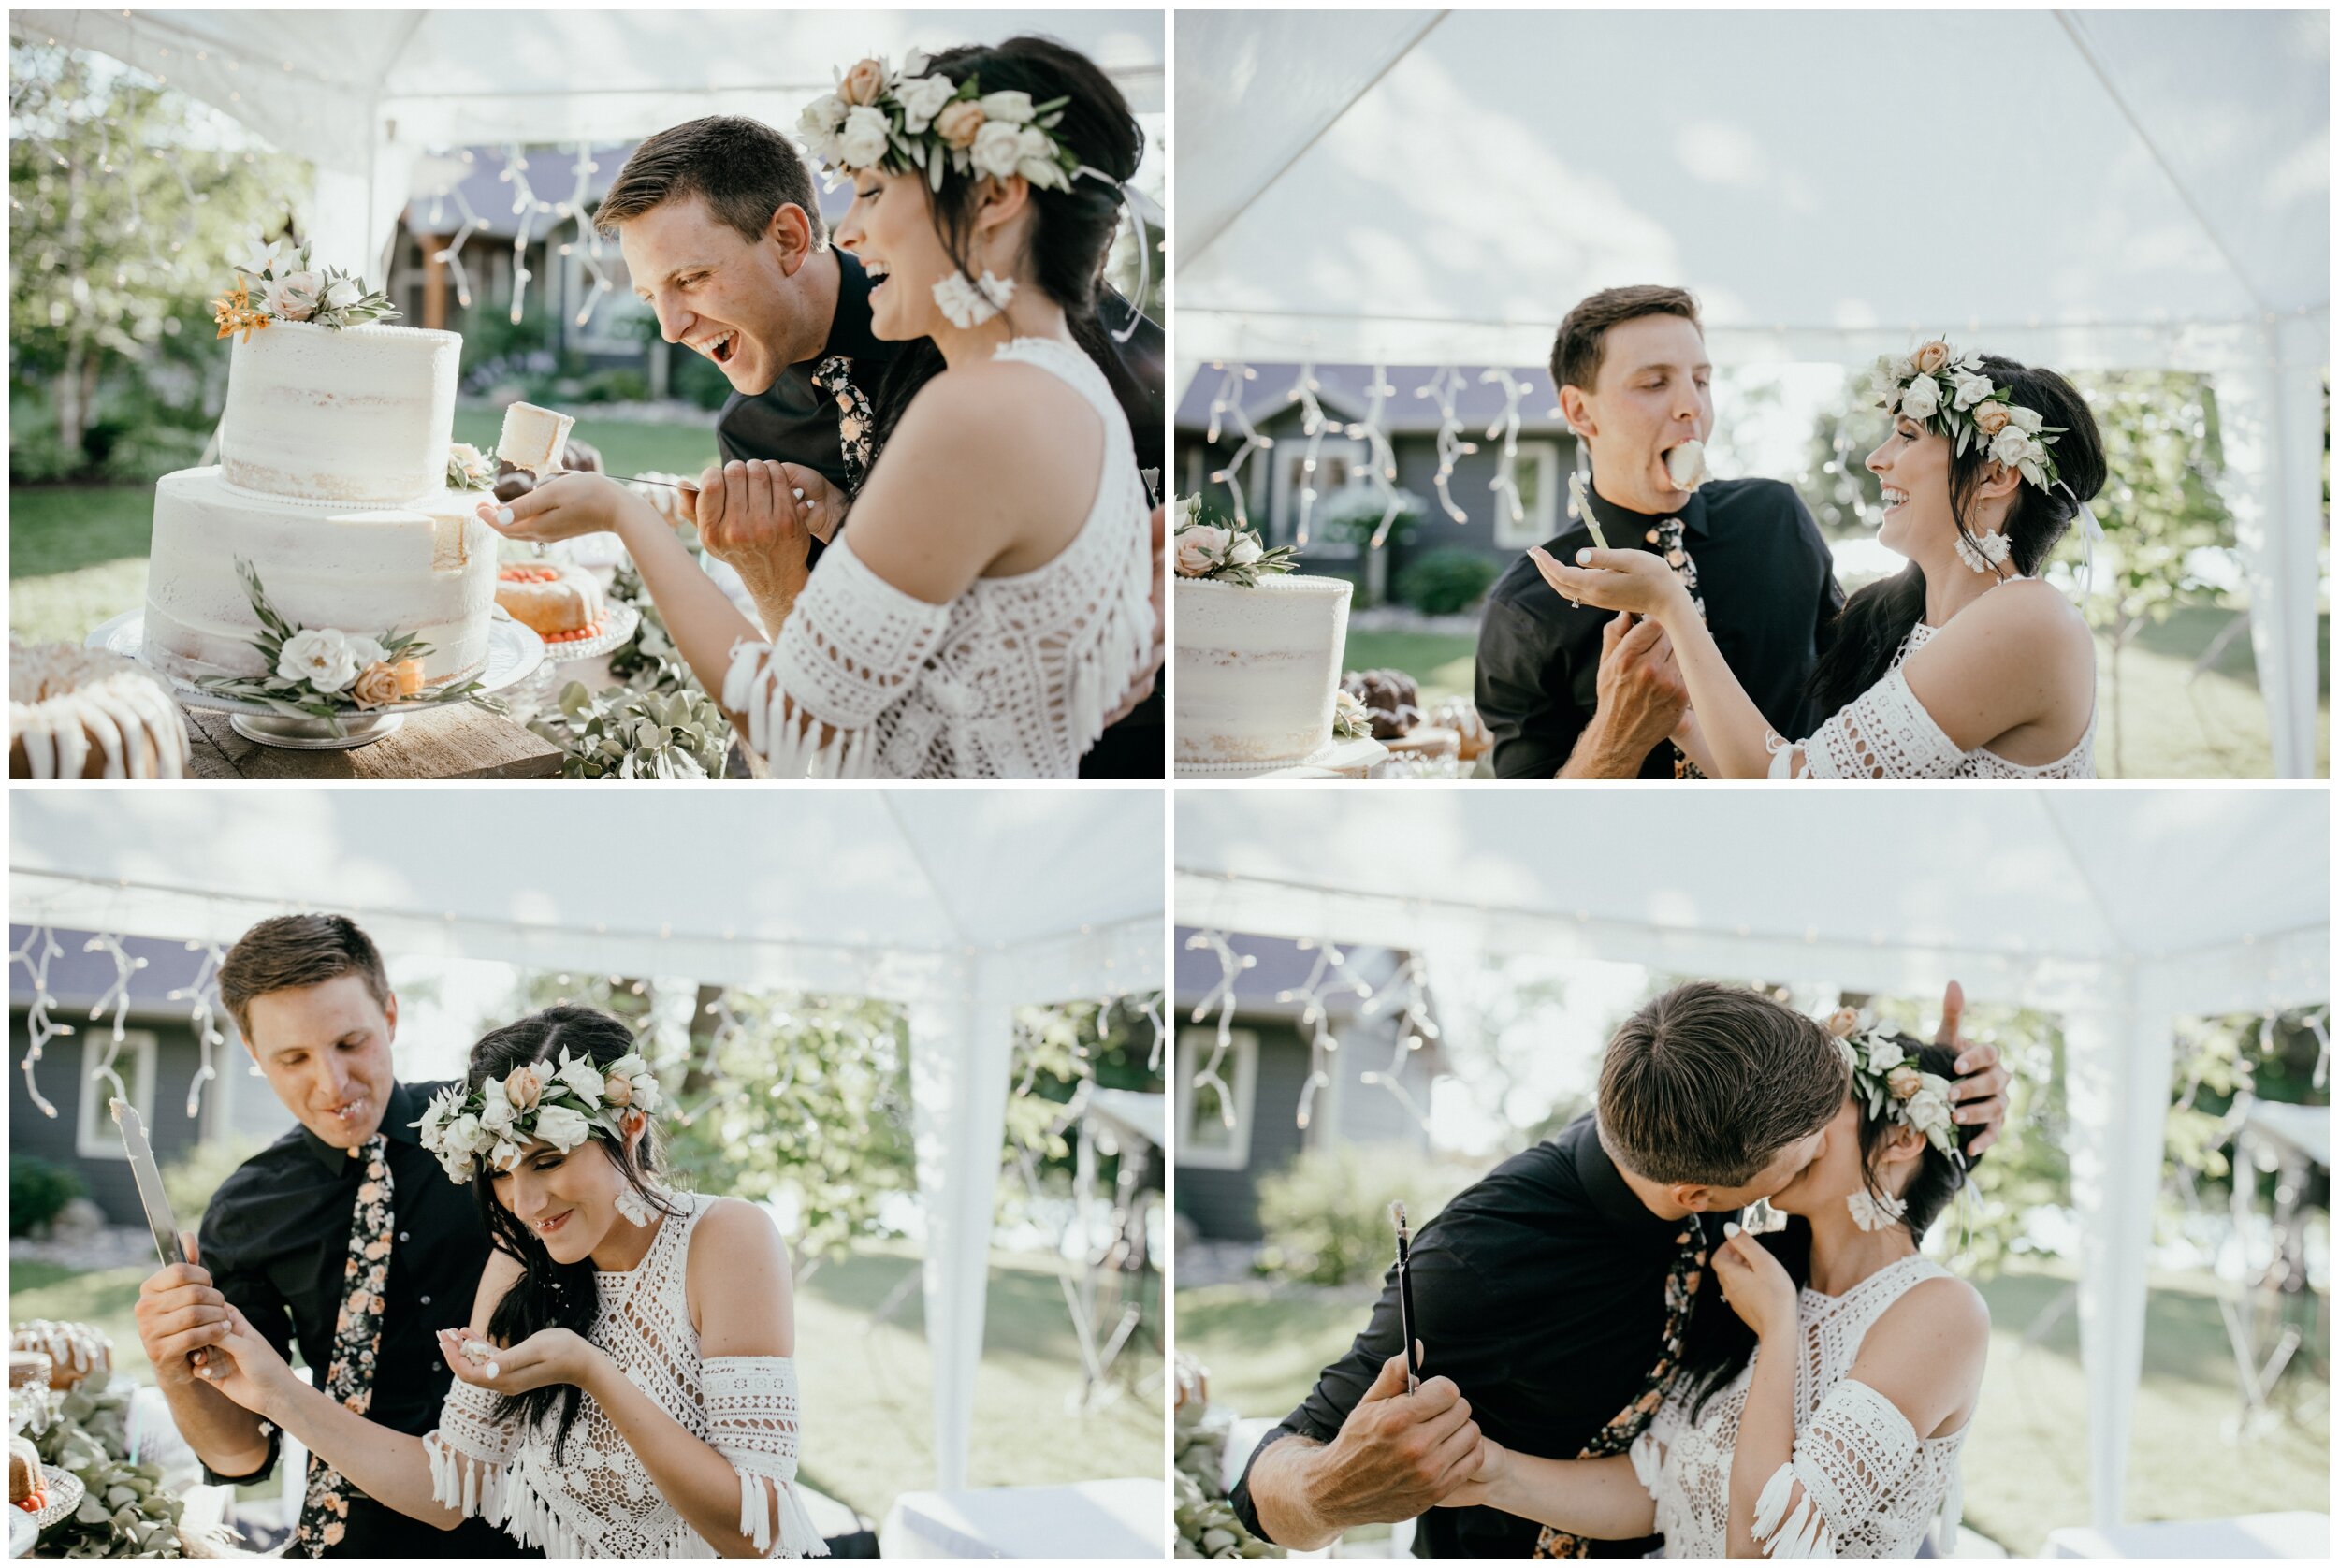 Dreamy boho inspired Minnesota summer wedding with bride and groom cutting cake